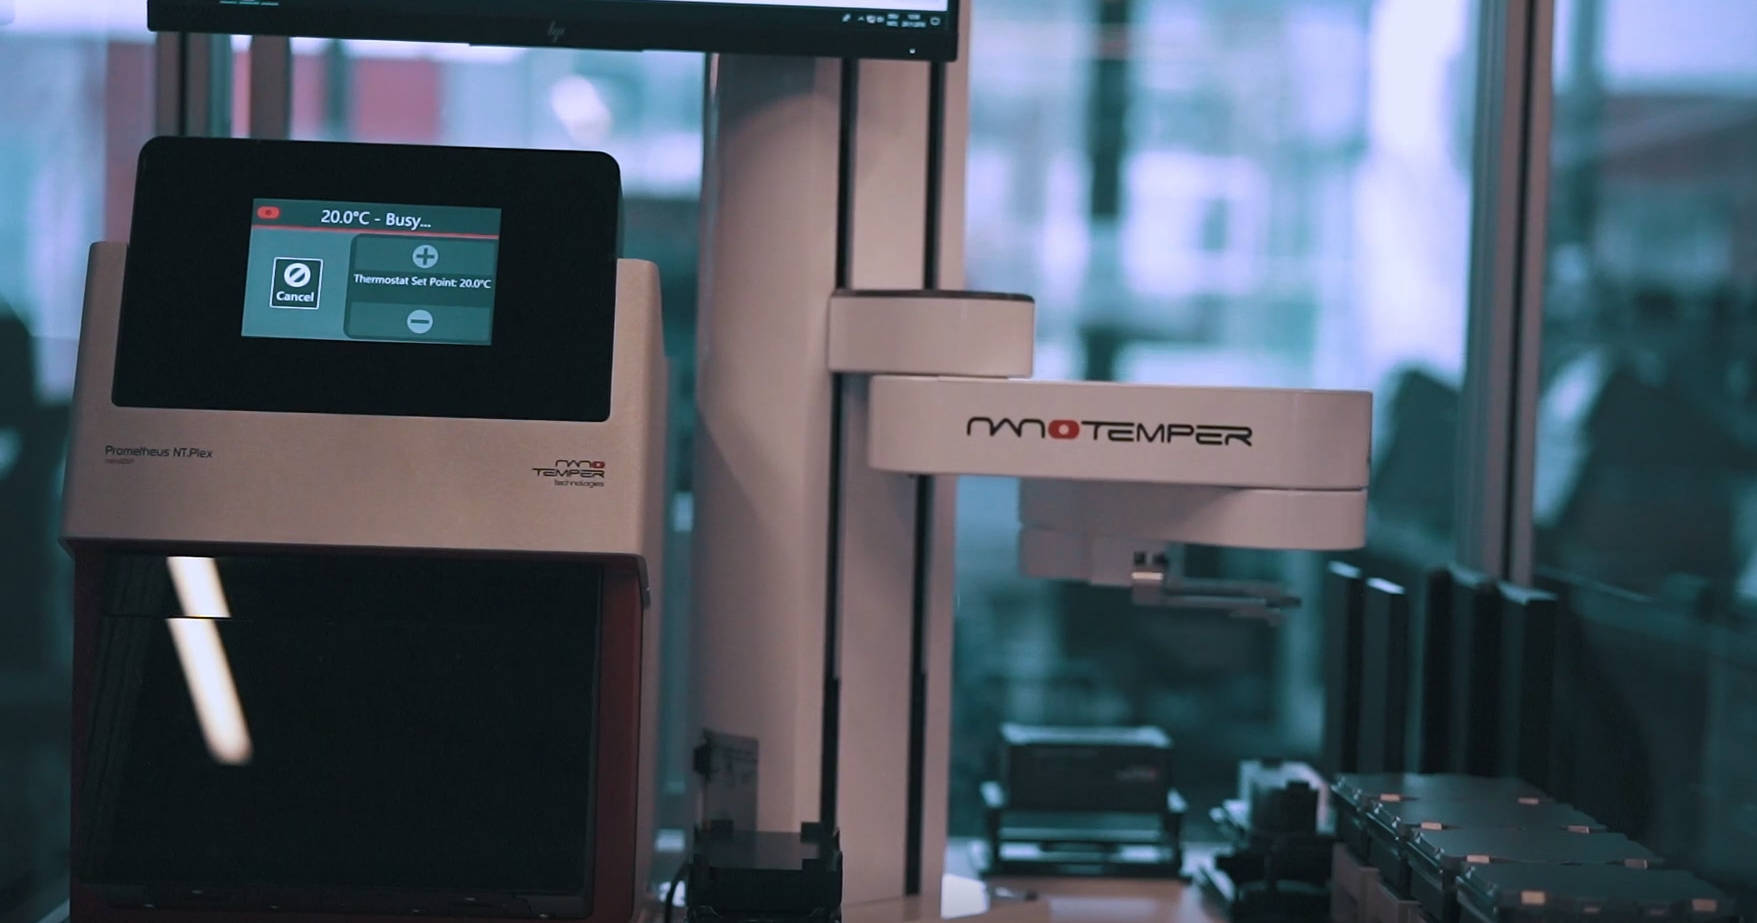 NanoTemper PR Panta+机械臂自动上样器 全自动多功能蛋白稳定性分析仪